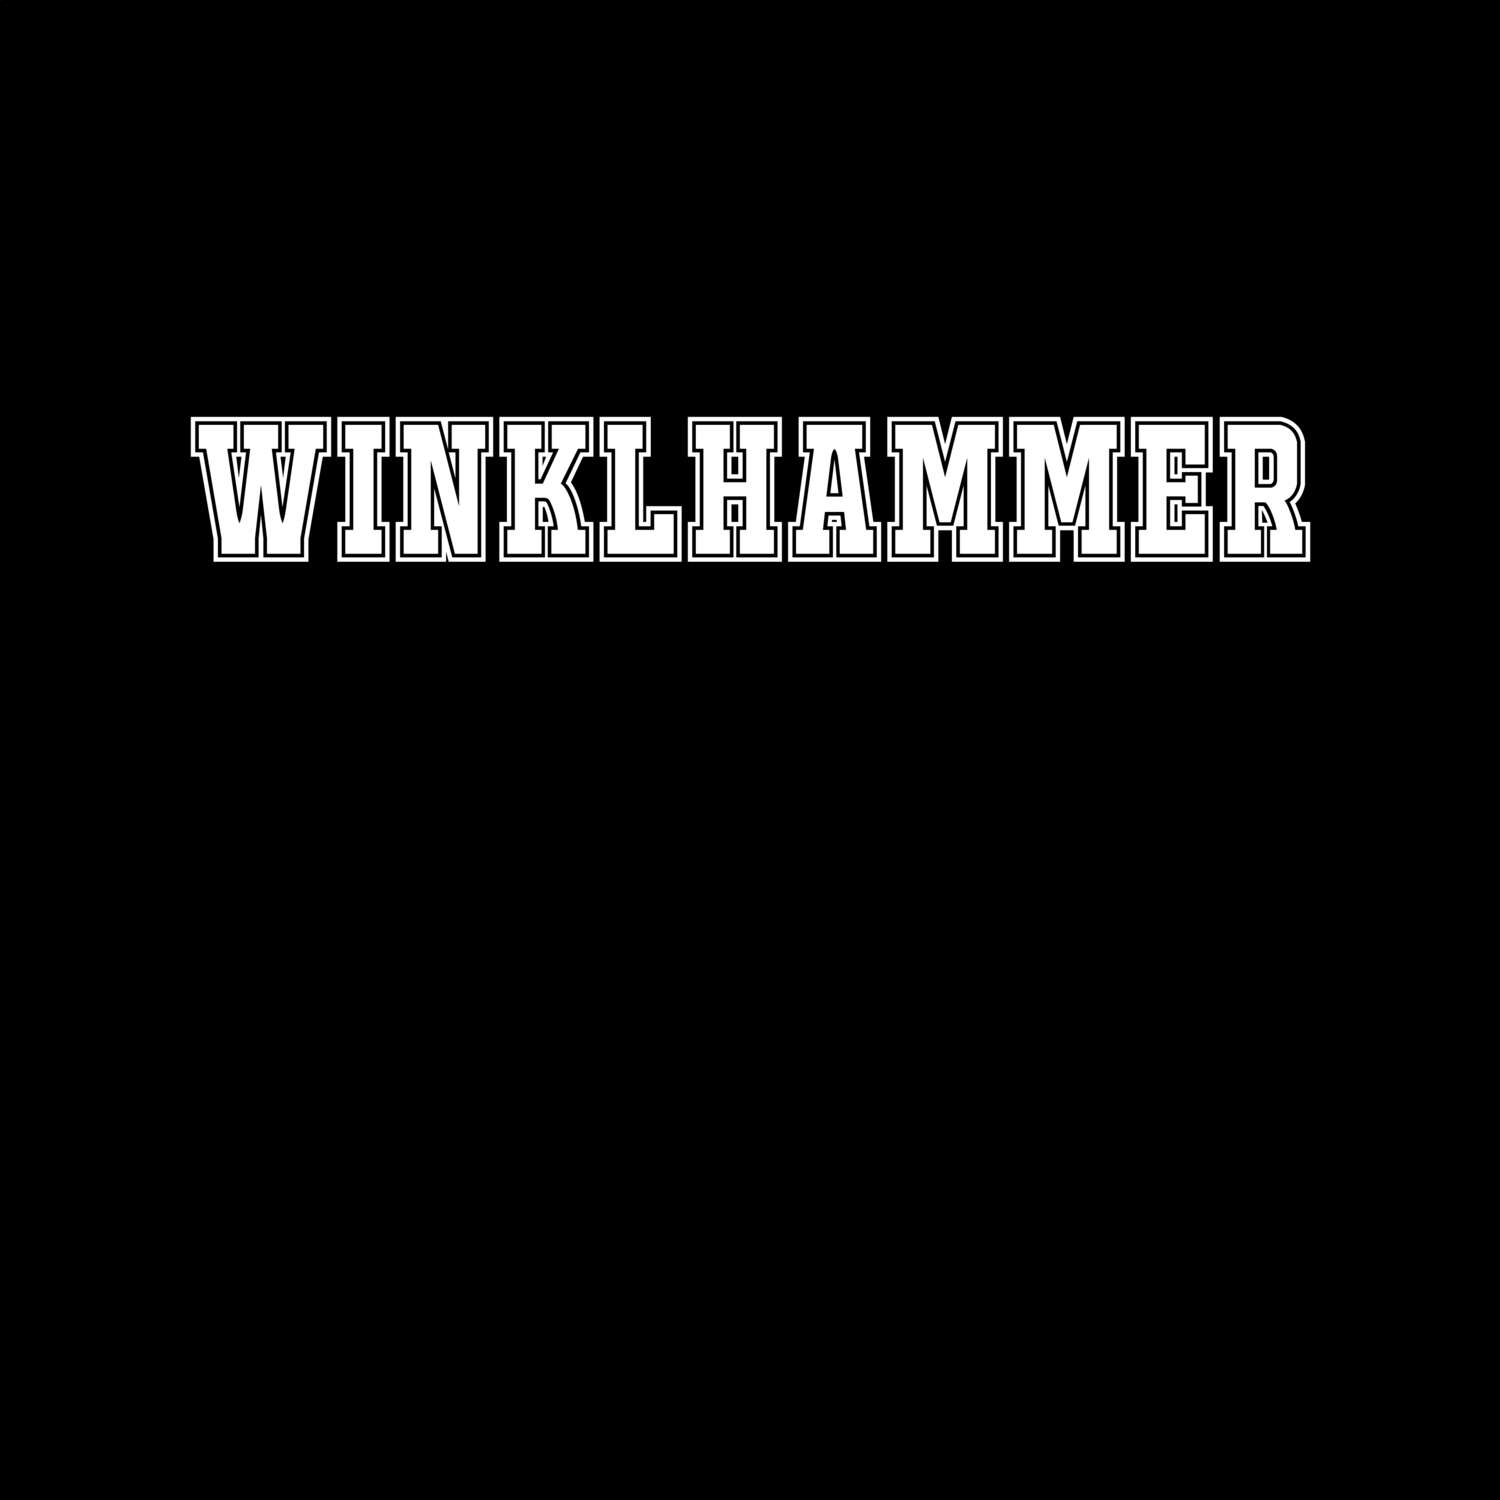 Winklhammer T-Shirt »Classic«